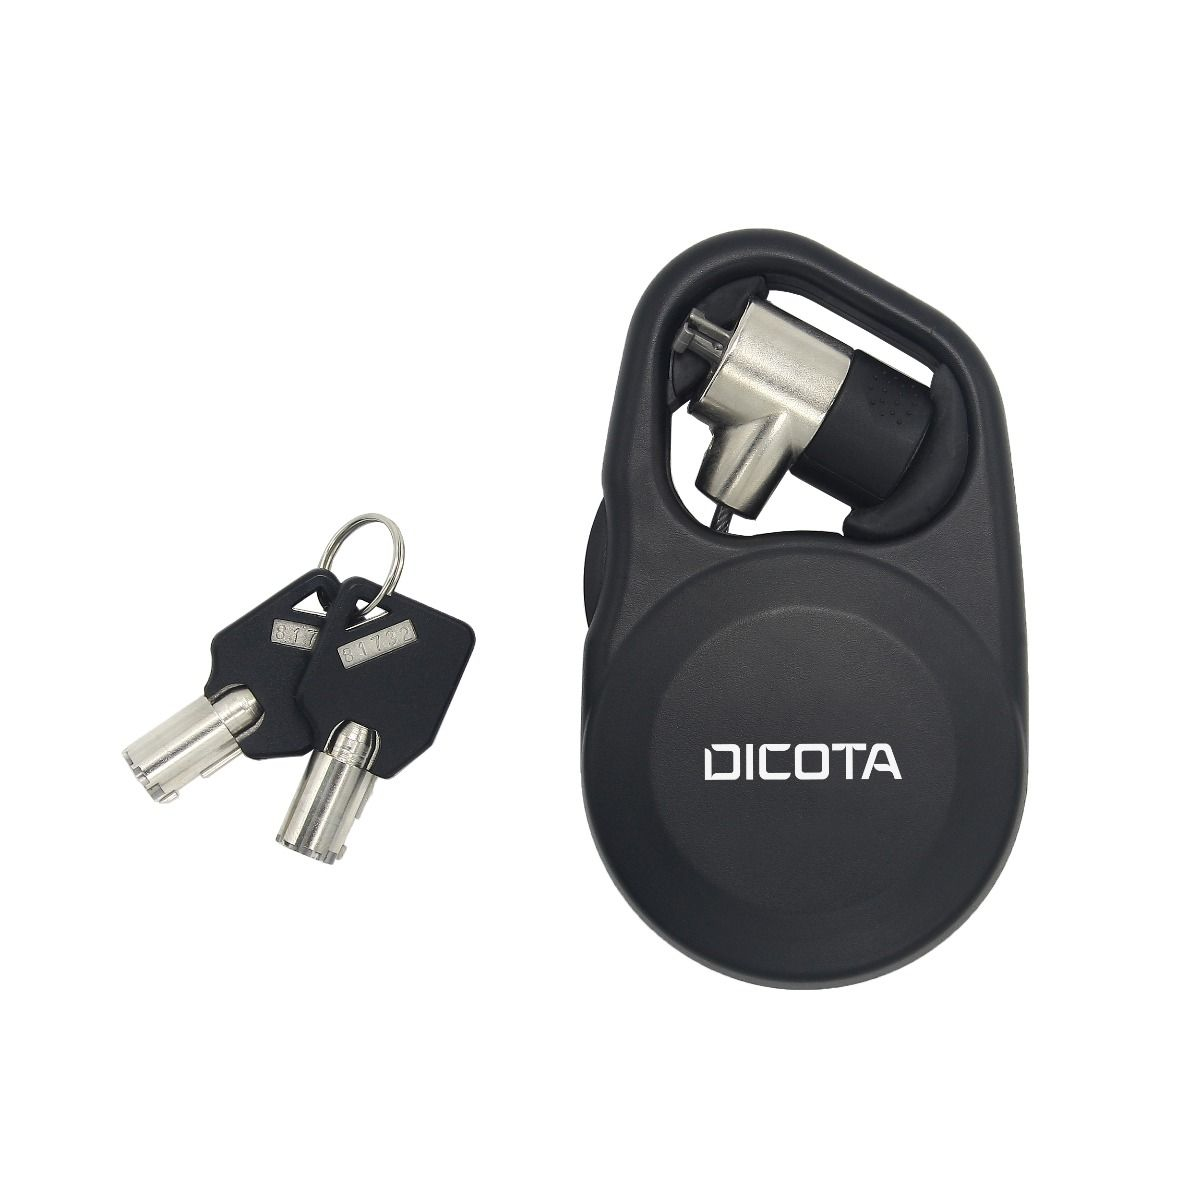 Dicota Lock Pro - Sicherheitskabelschloss - 1.38